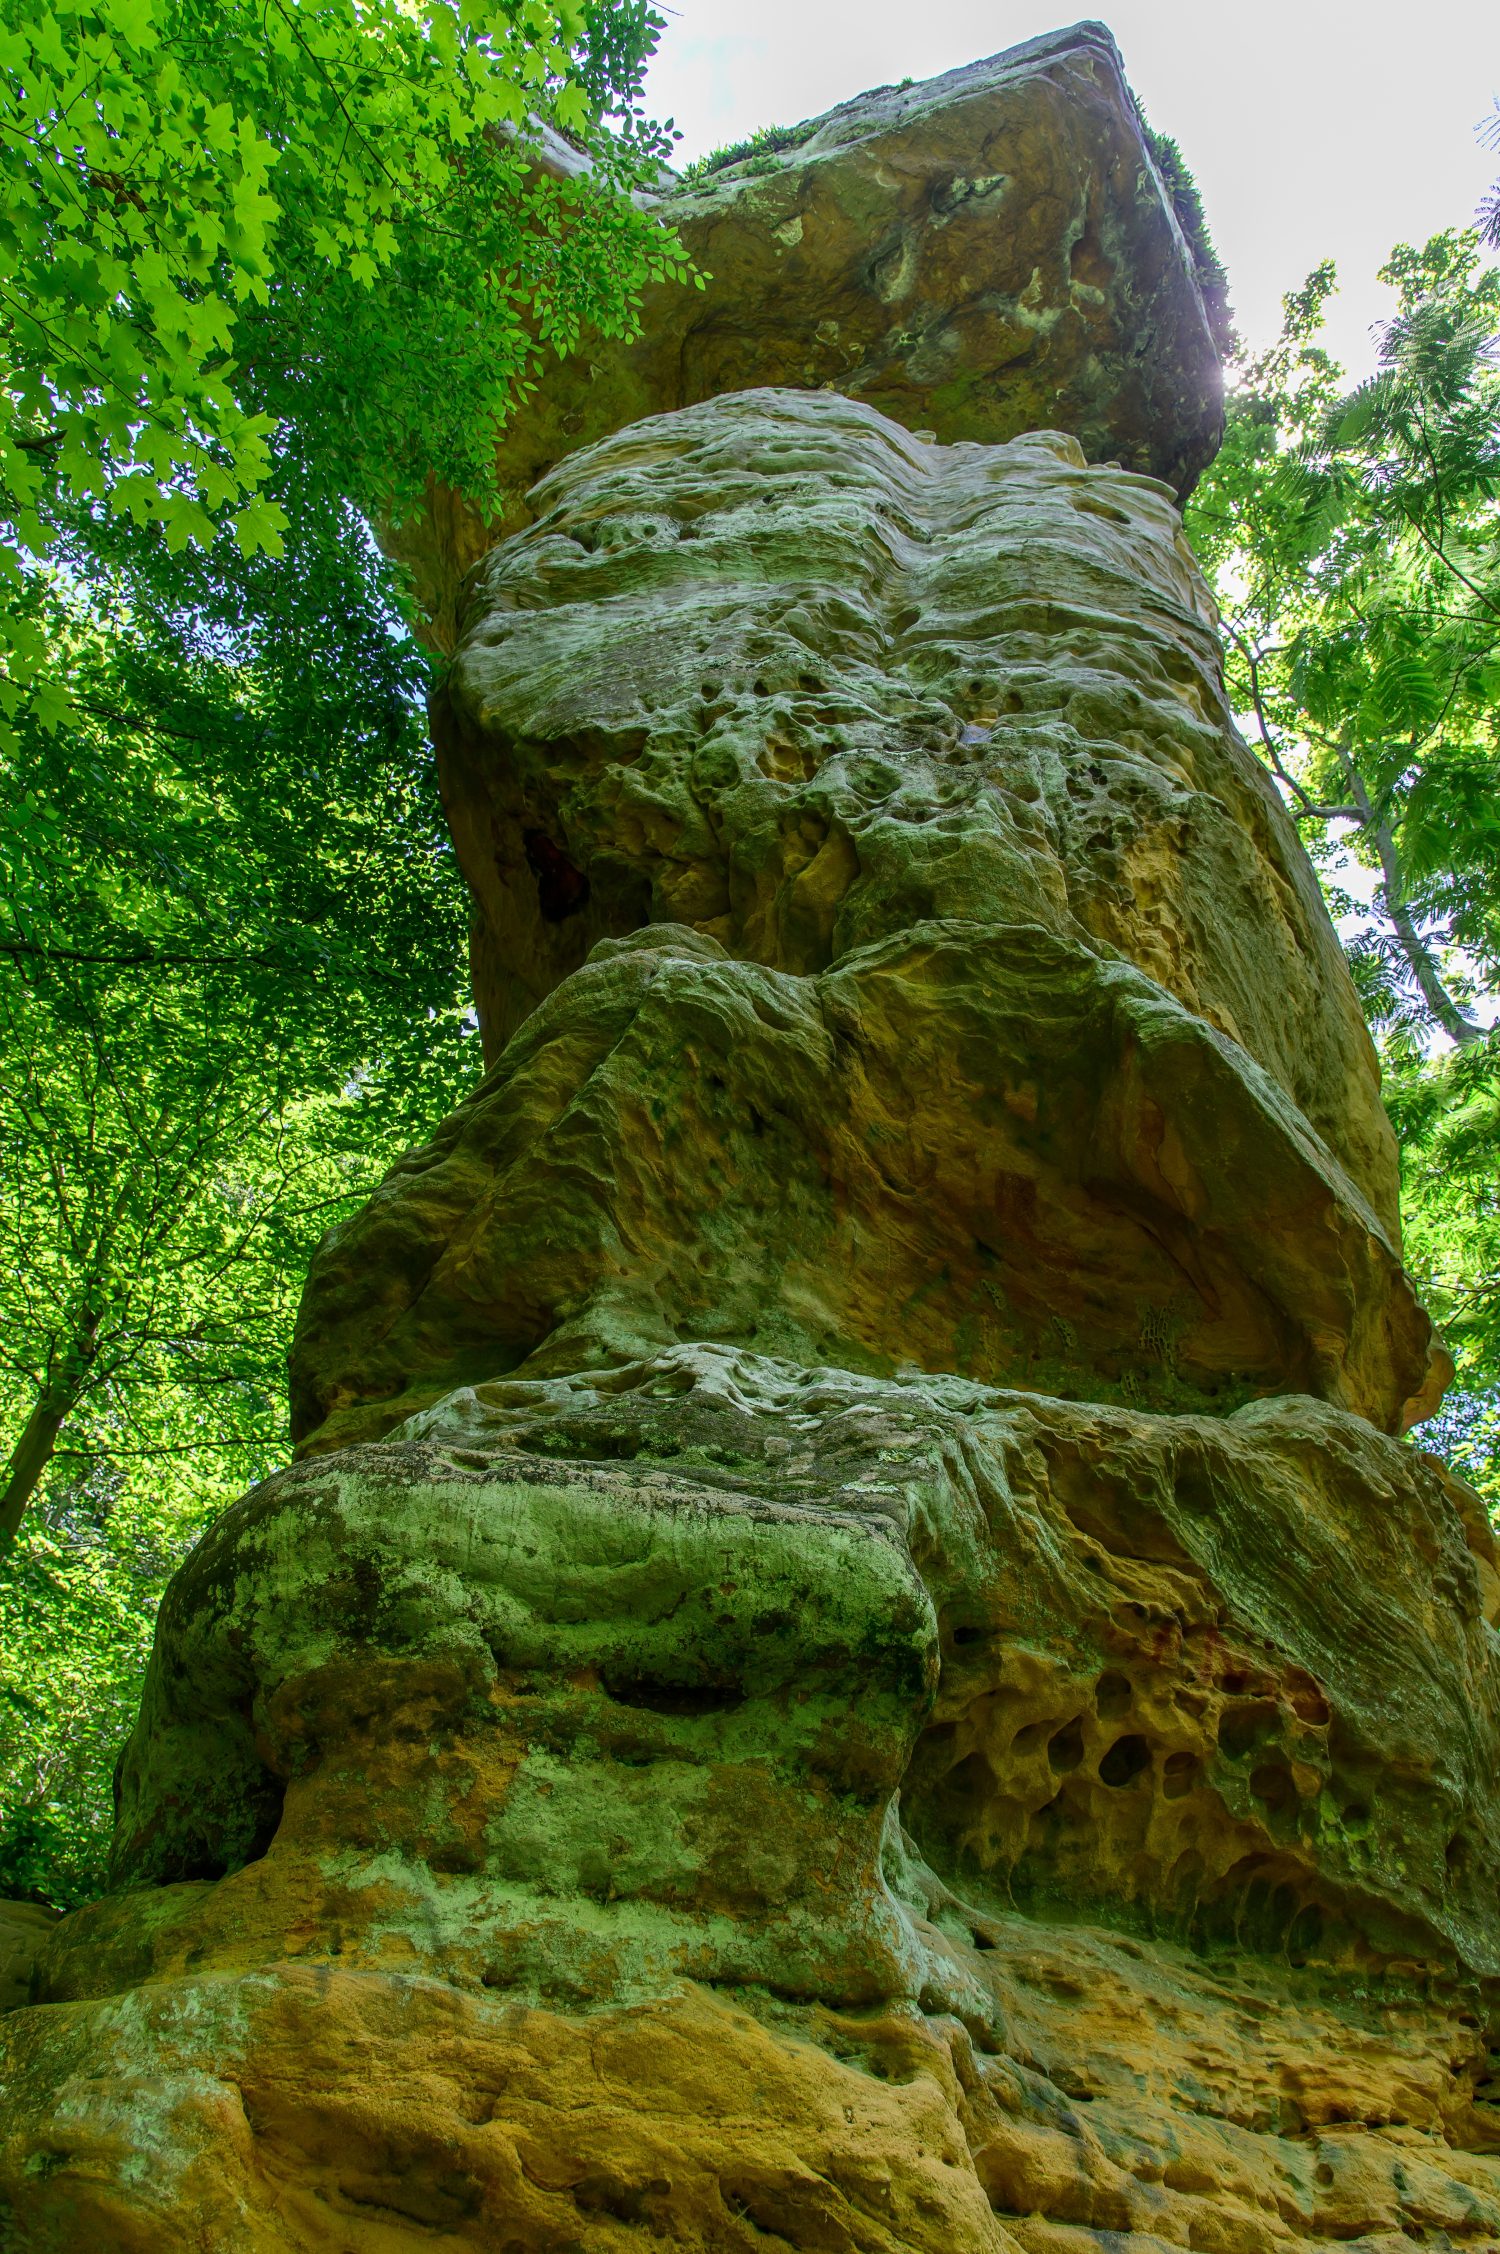 Jug Rock, a towering rock formation, near Shoals, Indiana.